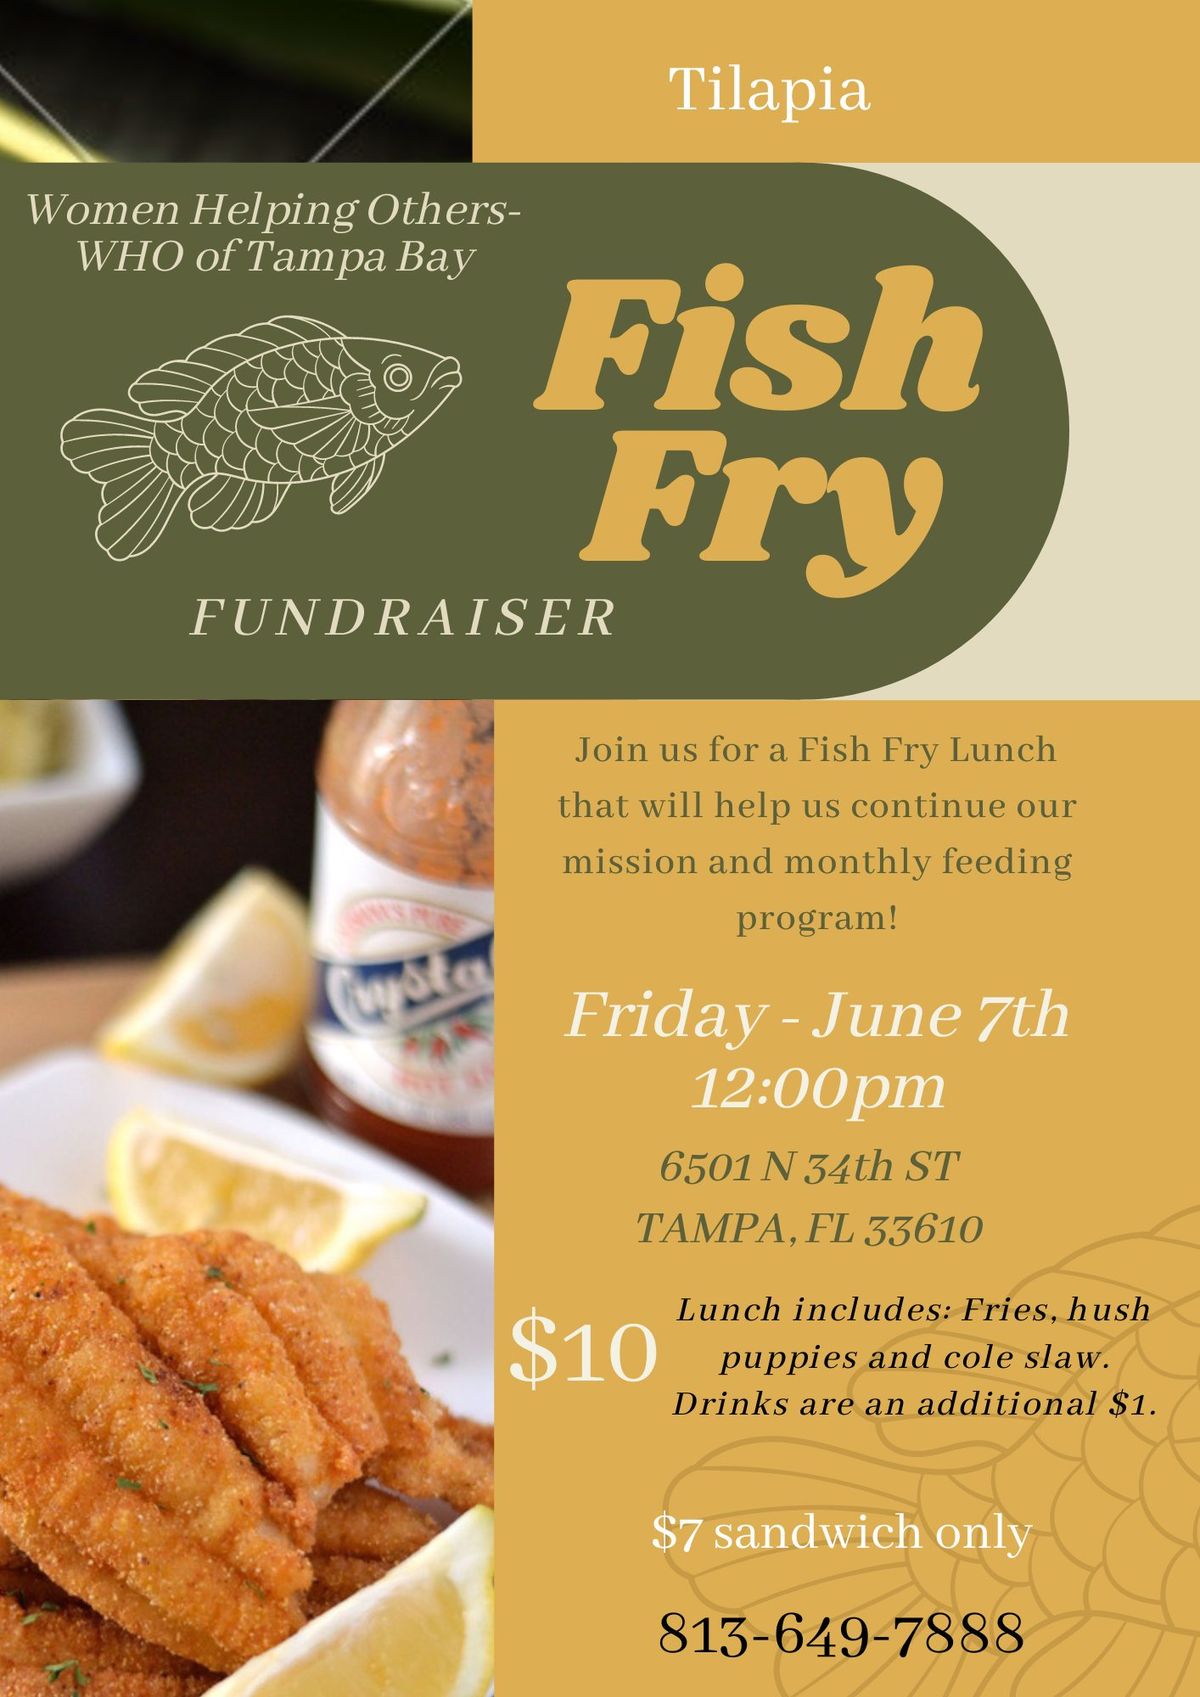 WHO's Fundraising Fish Fry